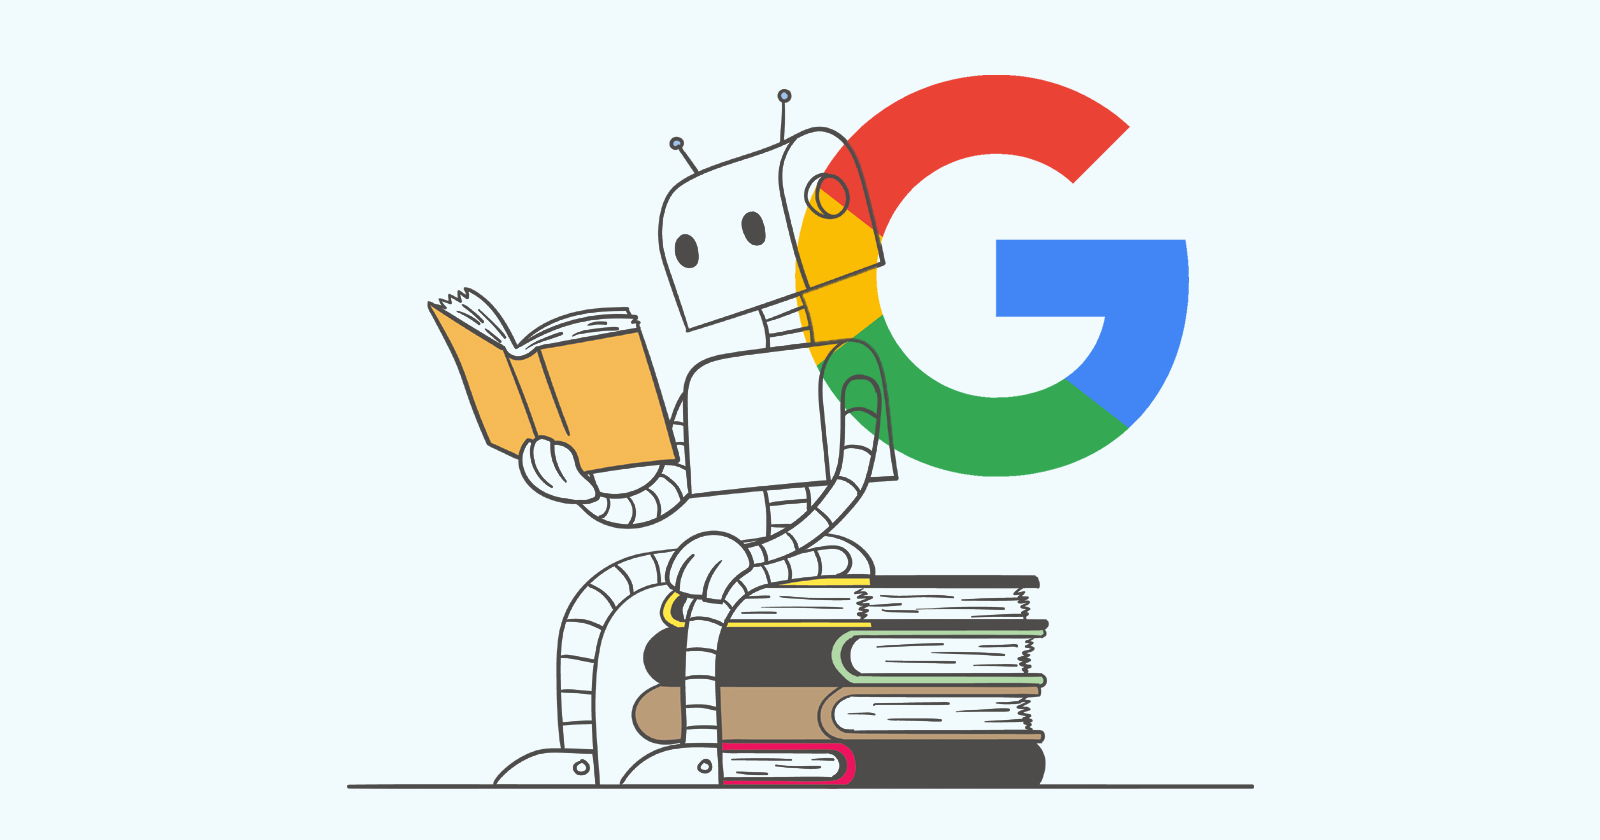 Google Ranking Algorithm Research Introduces TW-BERT